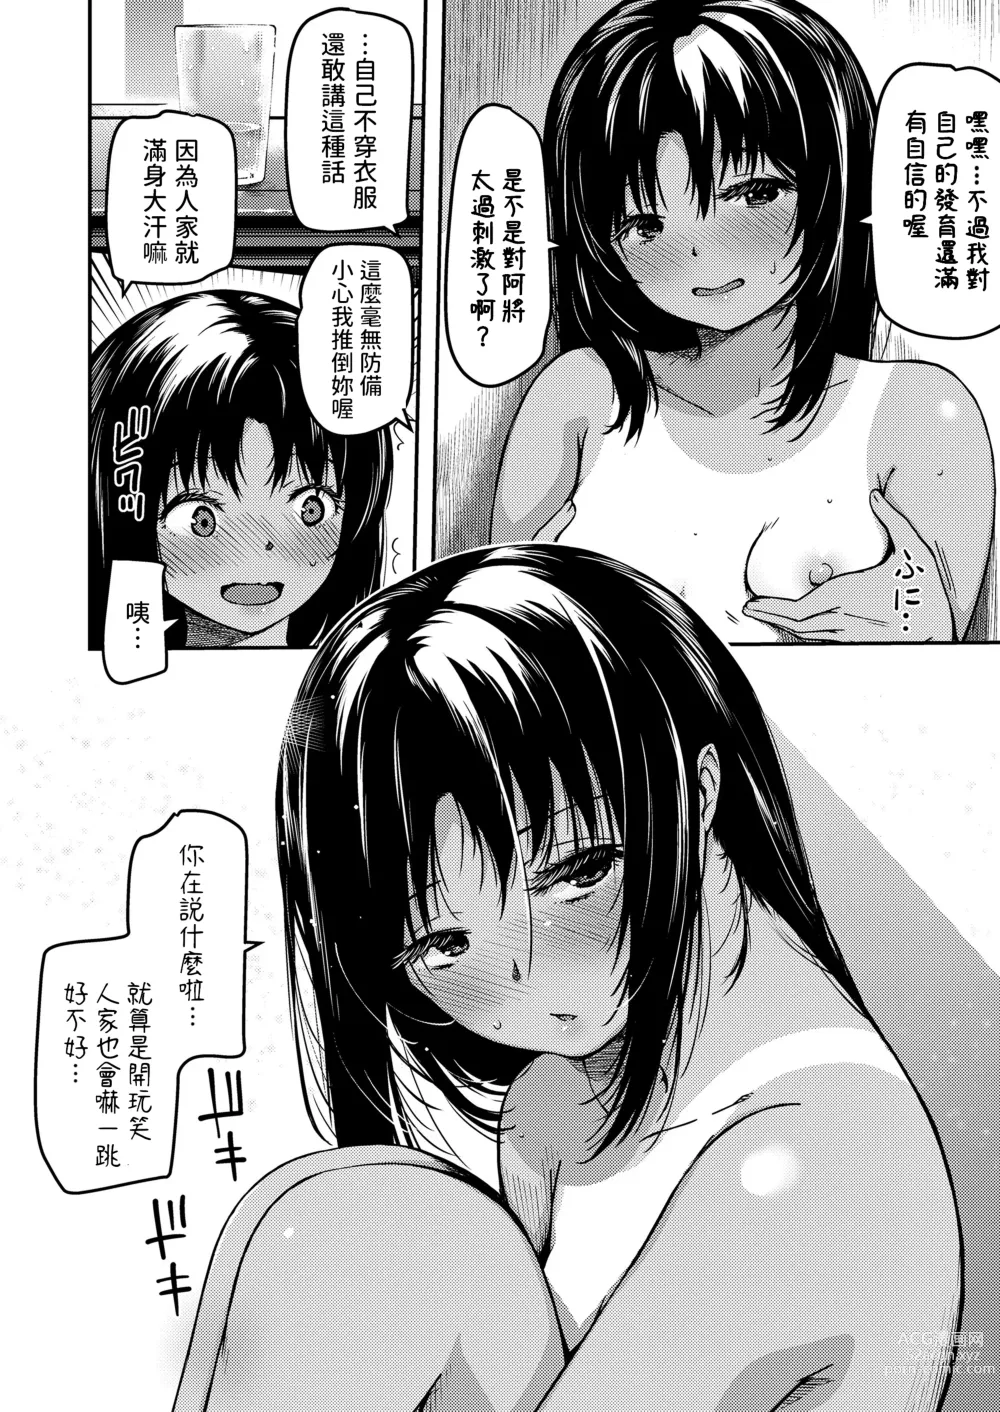 Page 4 of manga Inaka de Hisabisa ni Au Itoko